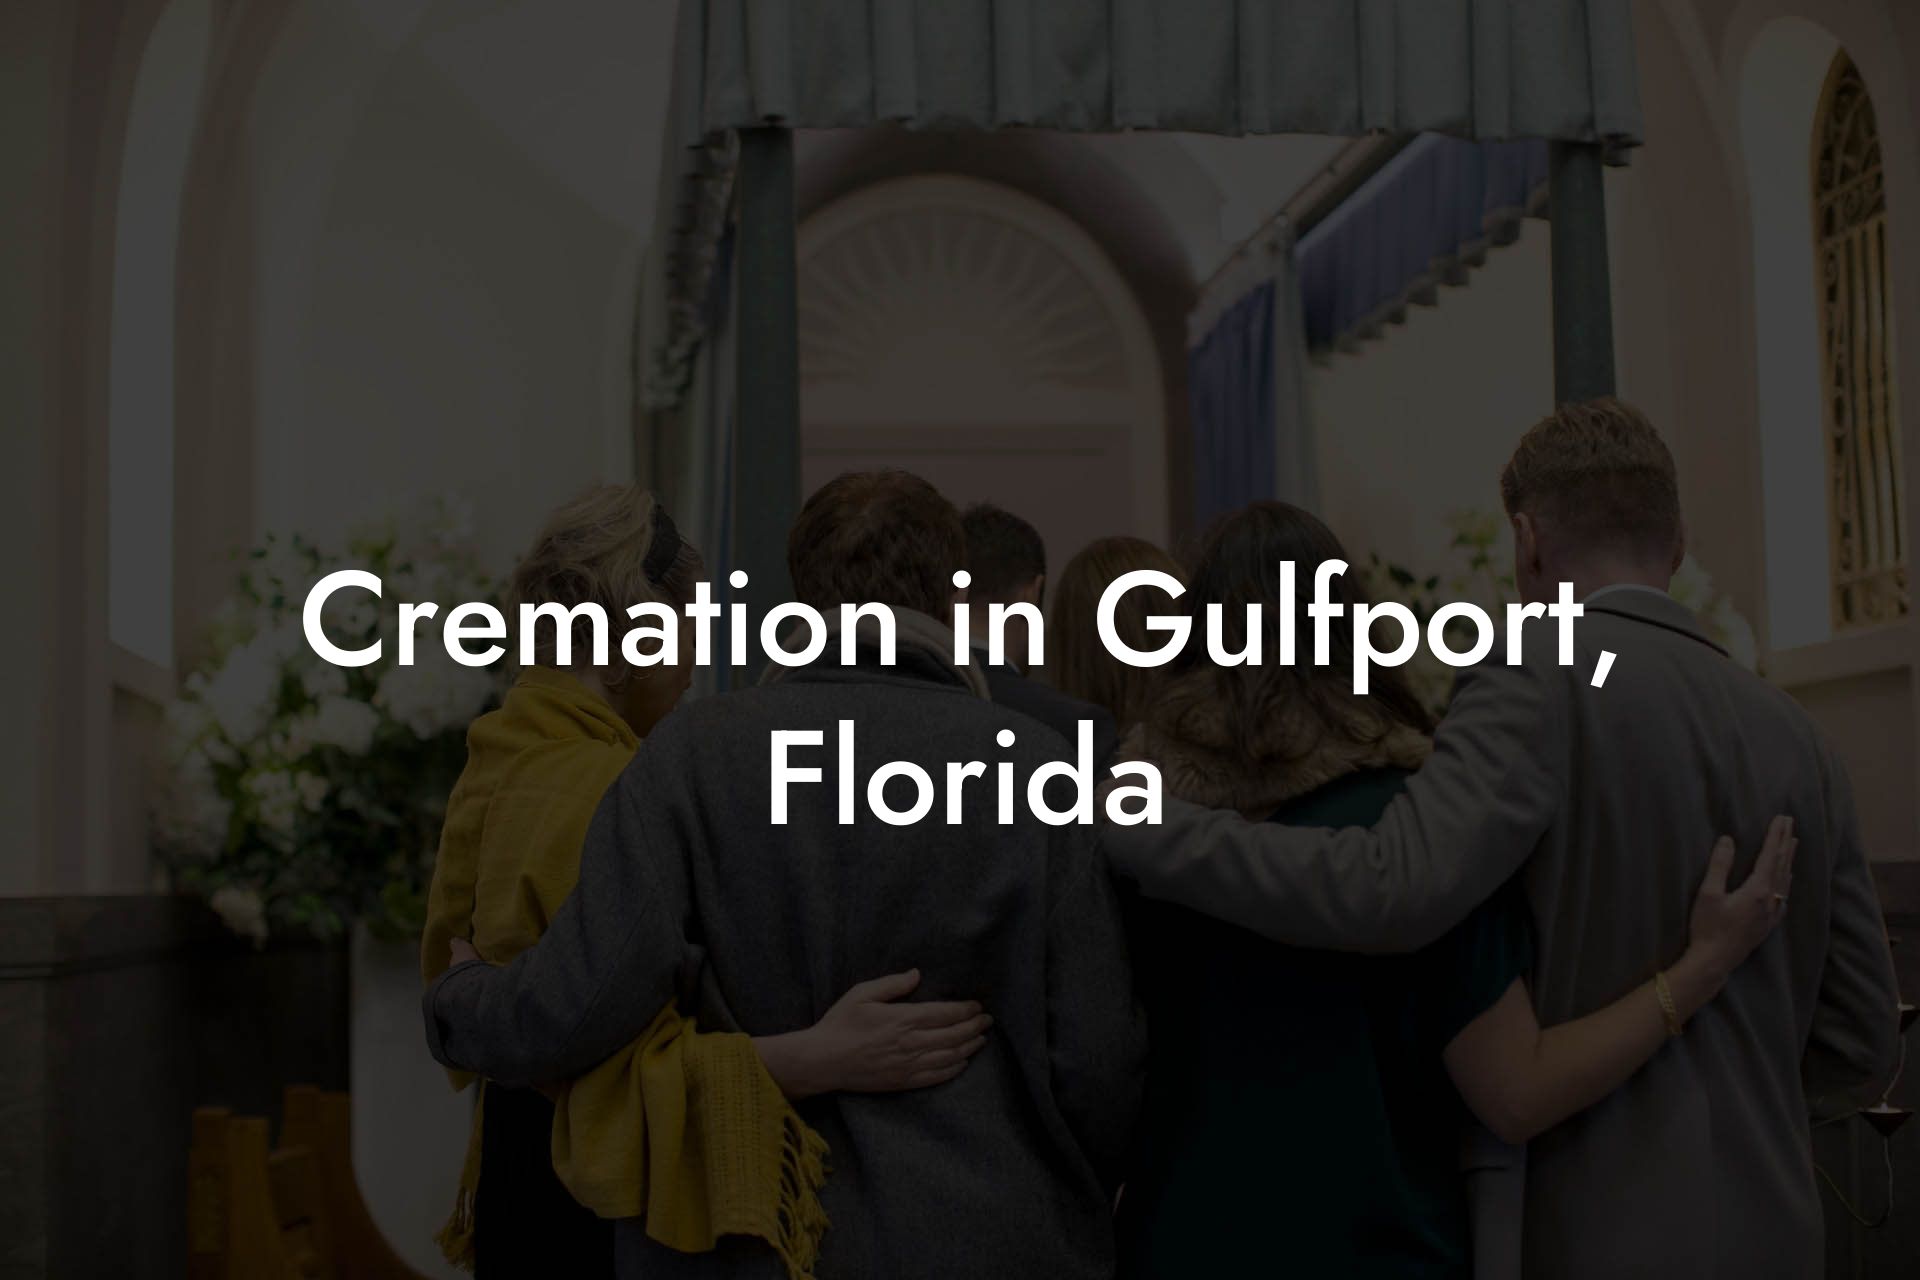 Cremation in Gulfport, Florida